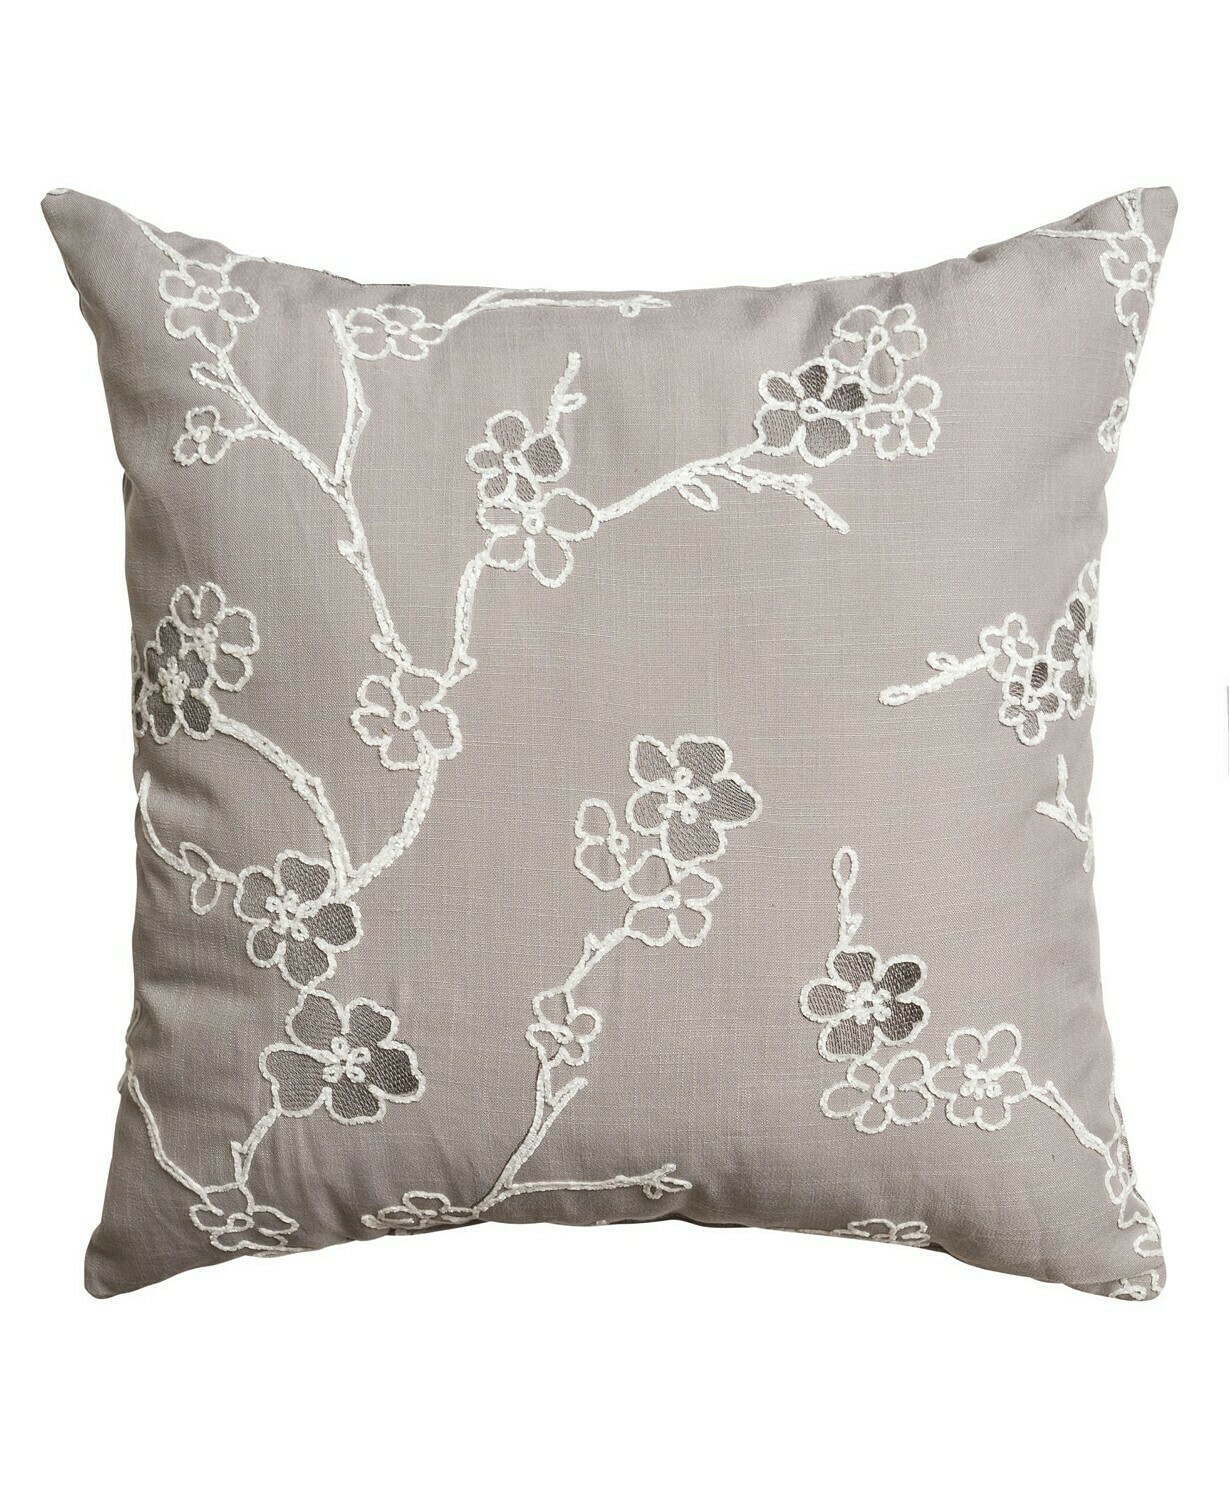 Softline Monica Pedersen Orchard 20" Square Decorative Pillow Bedding